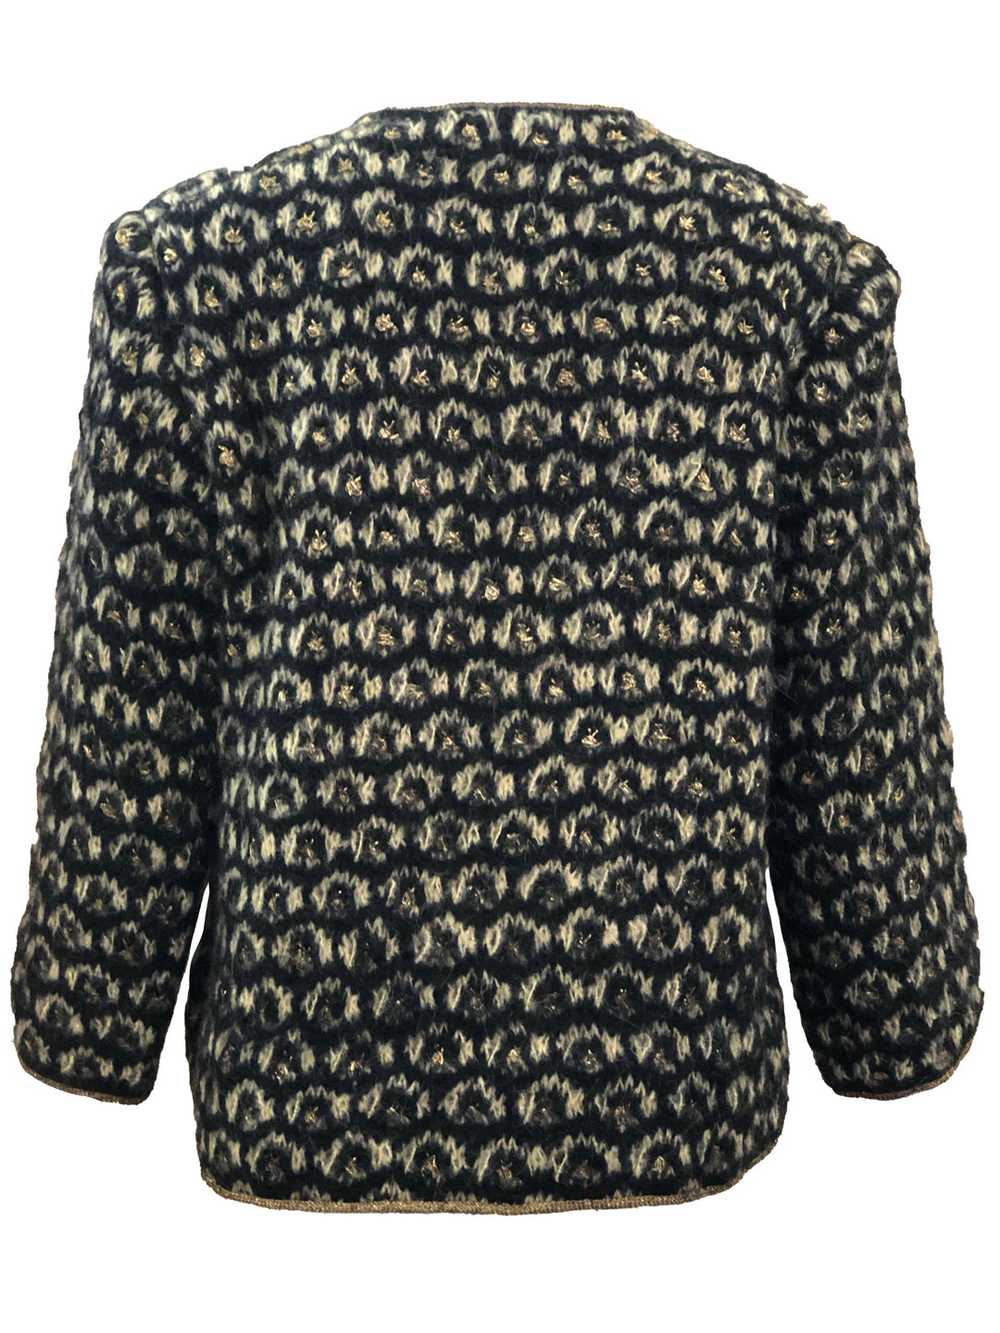 1960s Balenciaga Haute Couture Jacket - image 3